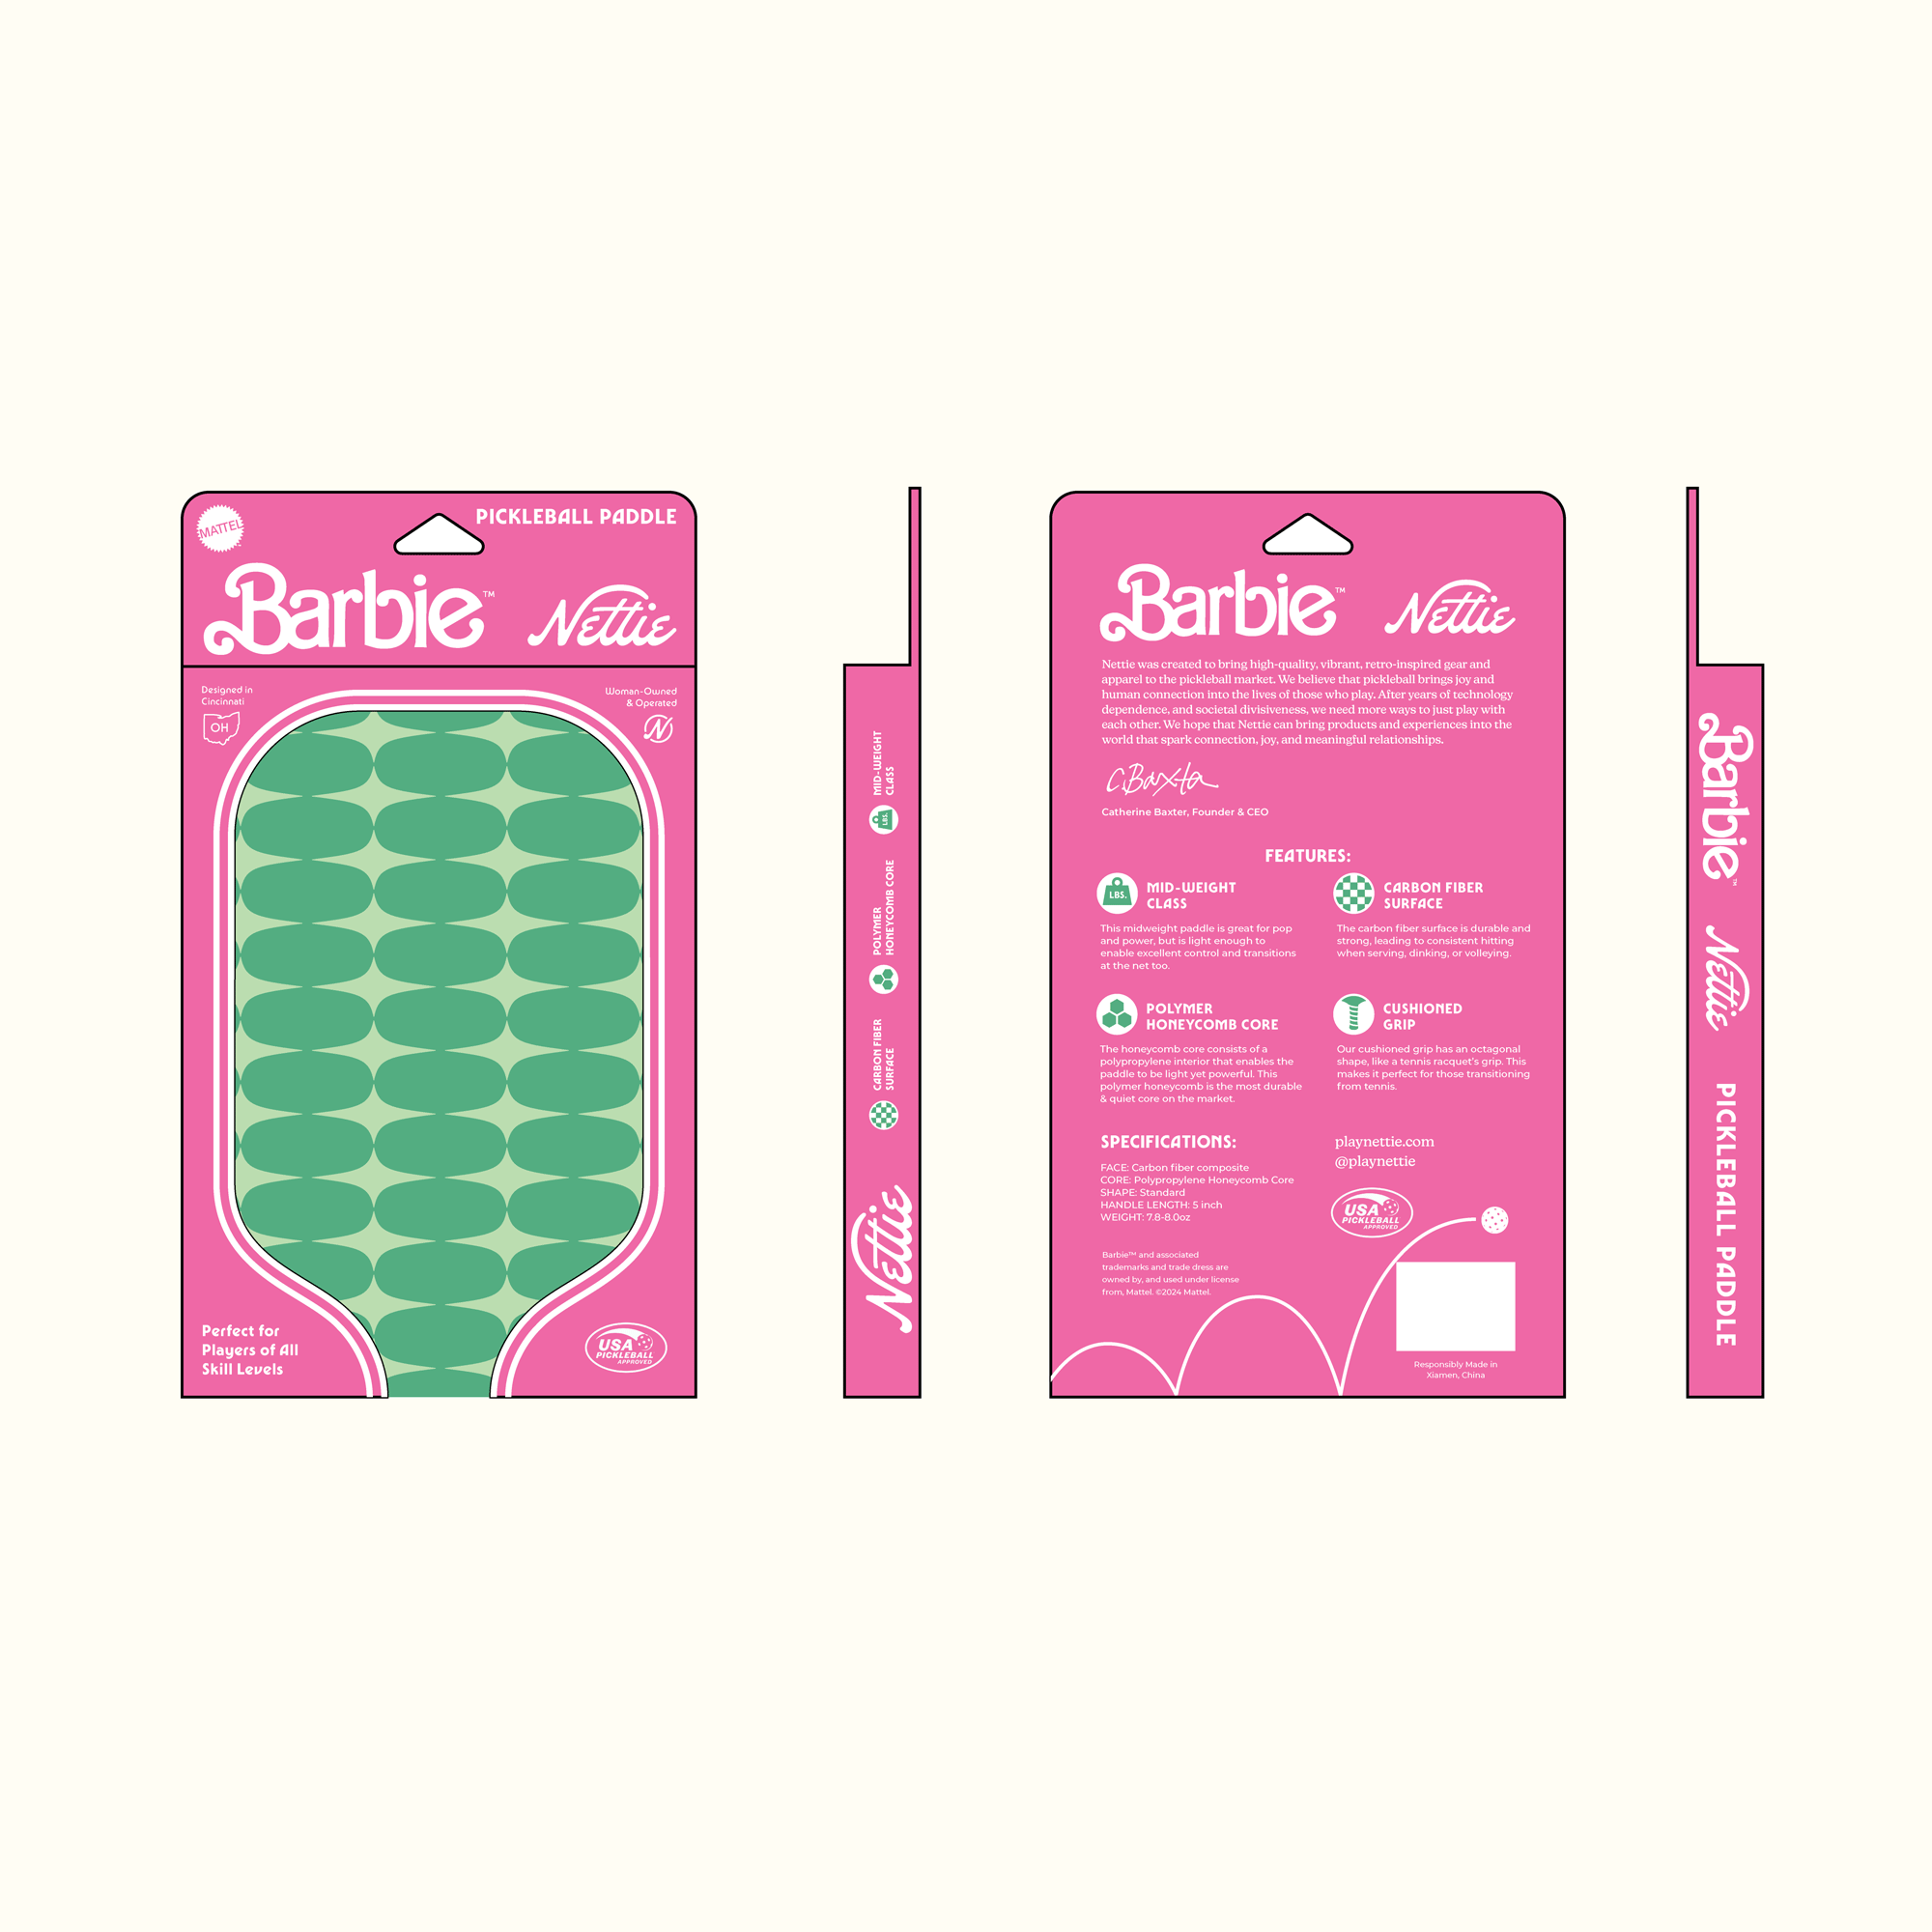 Nettie Barbie single paddle packaging